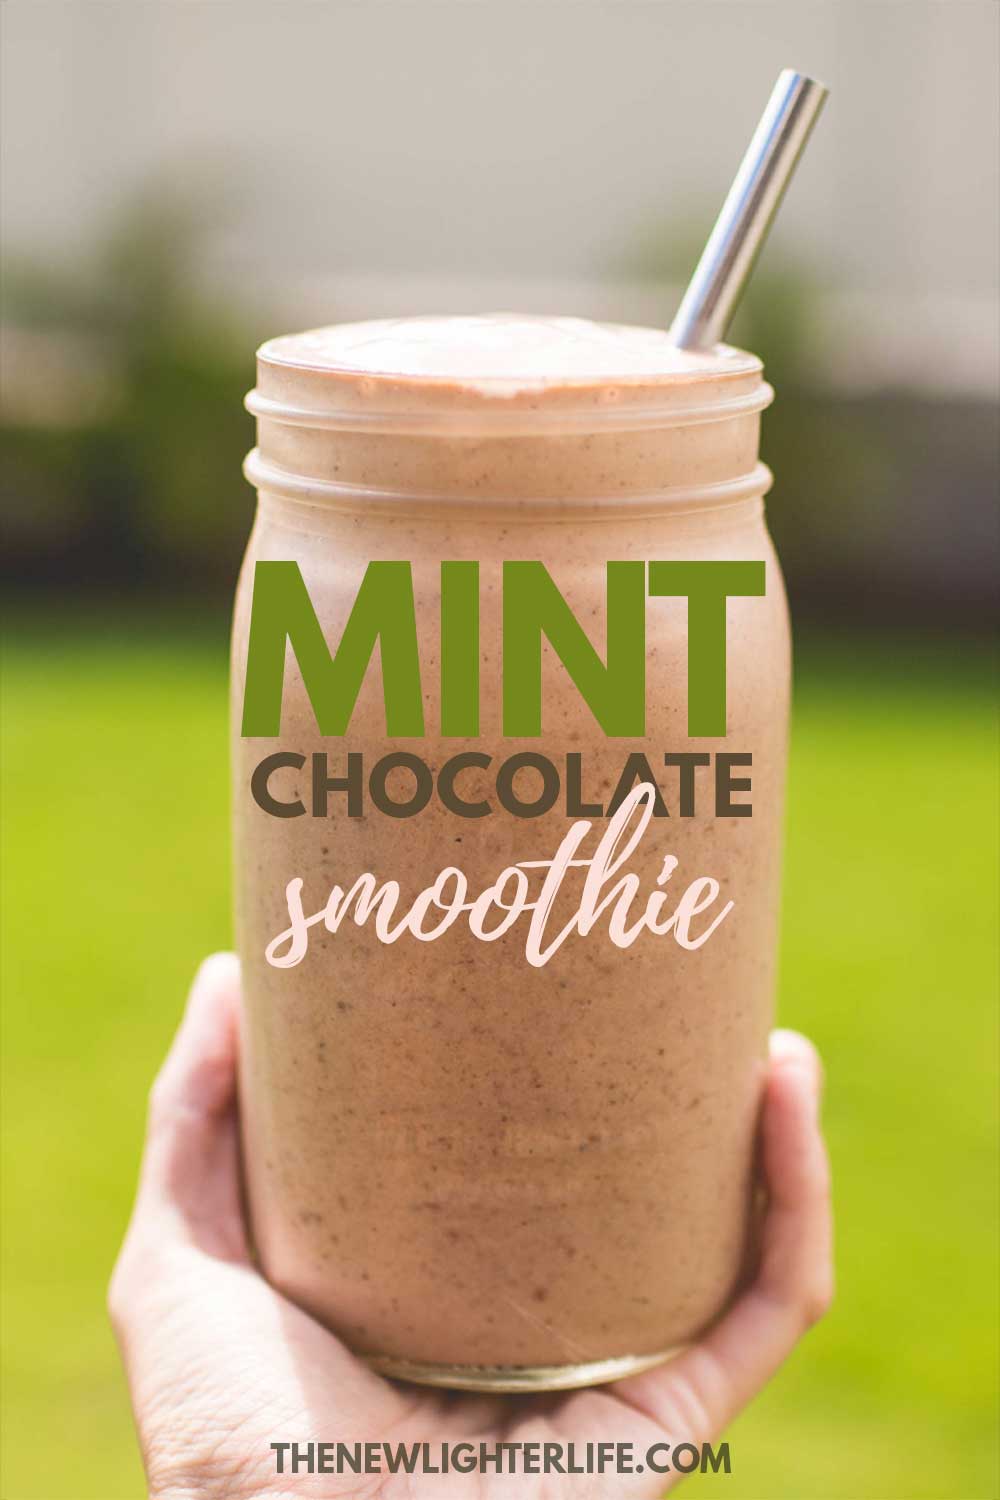 https://thenewlighterlife.com/wp-content/uploads/2013/10/Mint-chocolate-smoothie-pinterest.jpg